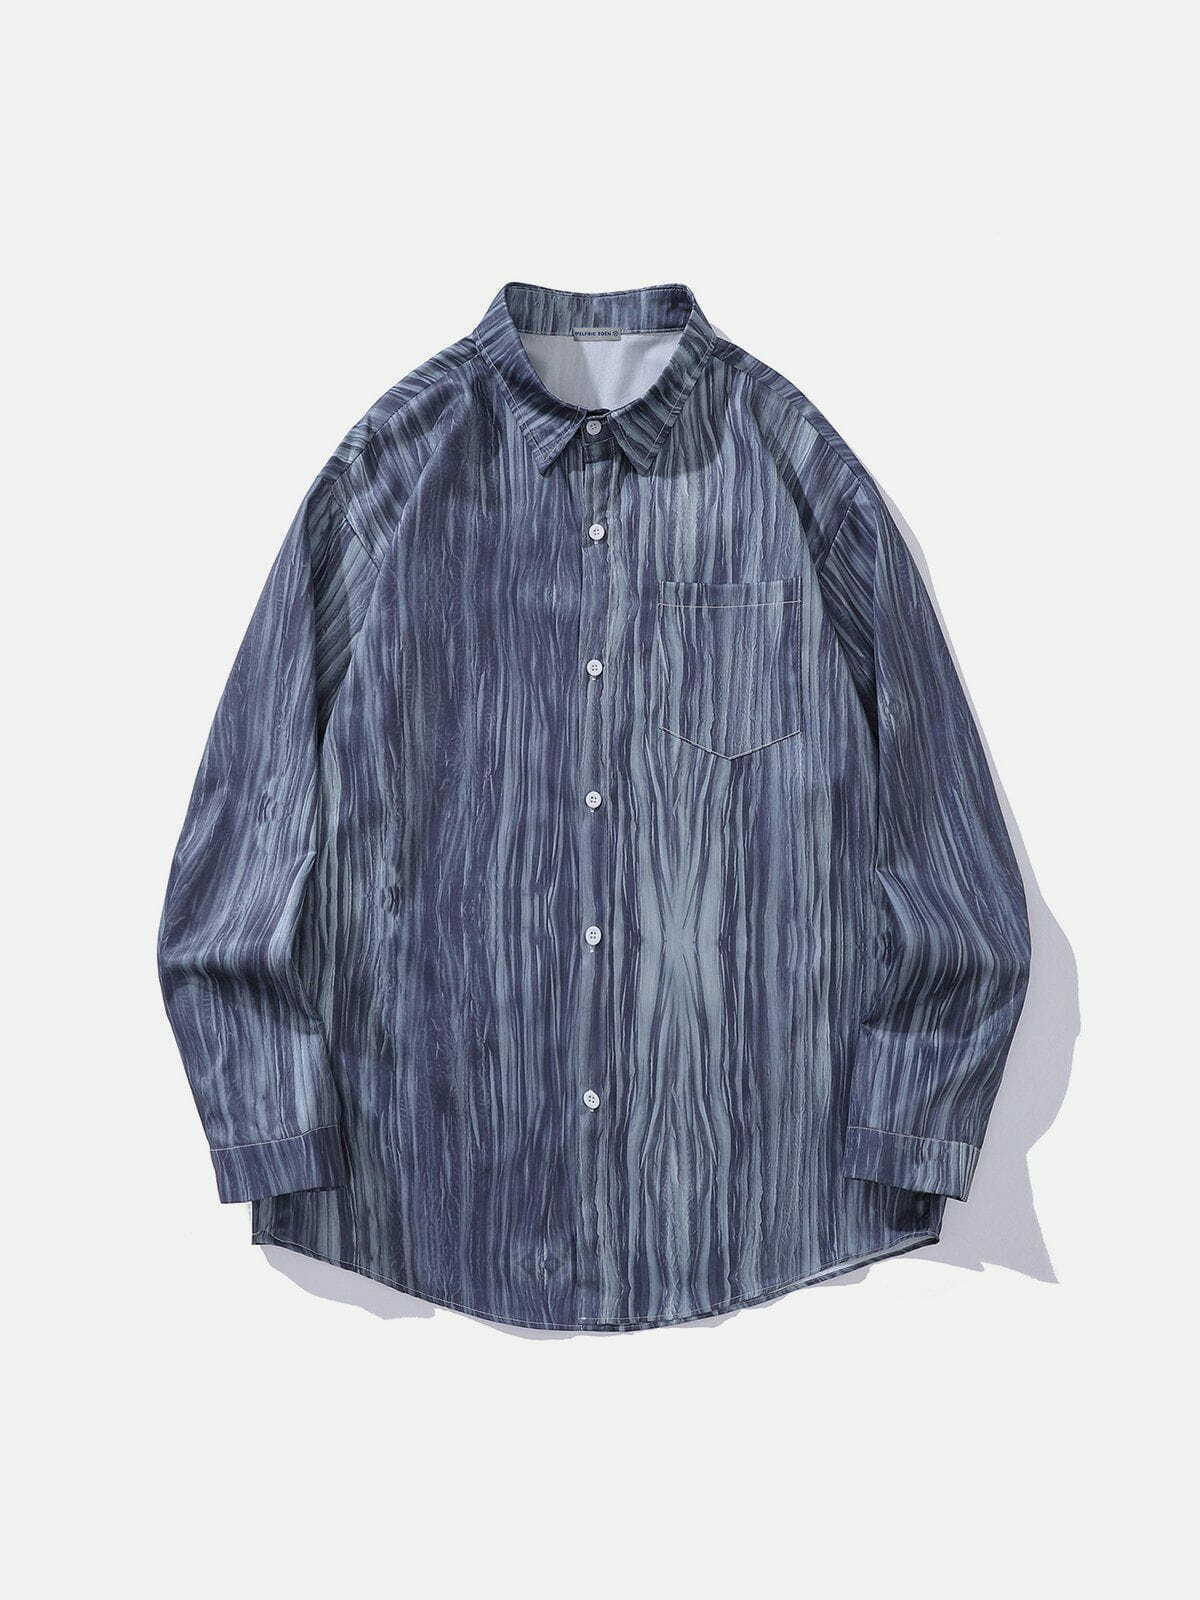 abstract stripe shirt sleek long sleeve urban trendsetter 3807